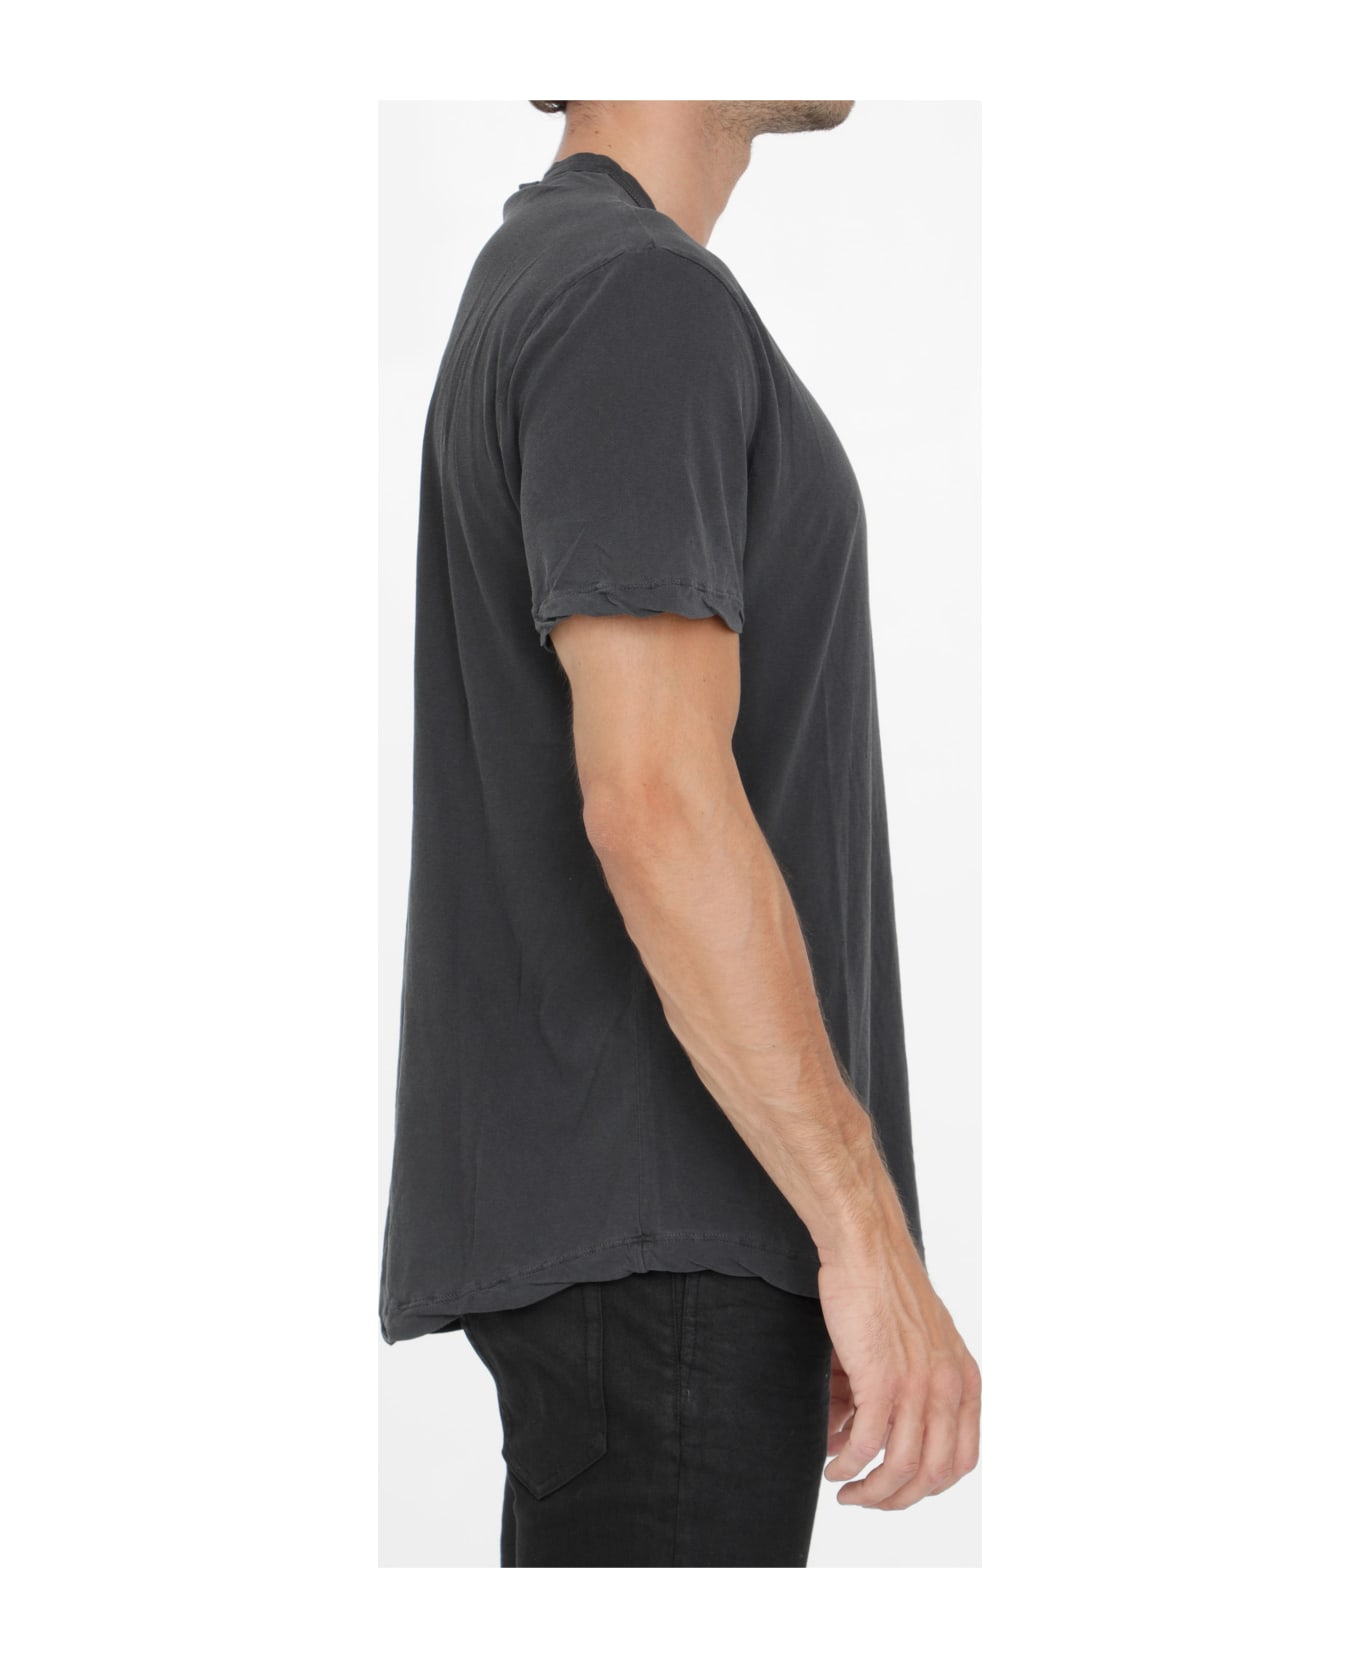 James Perse Grey Cotton T-shirt - GREY